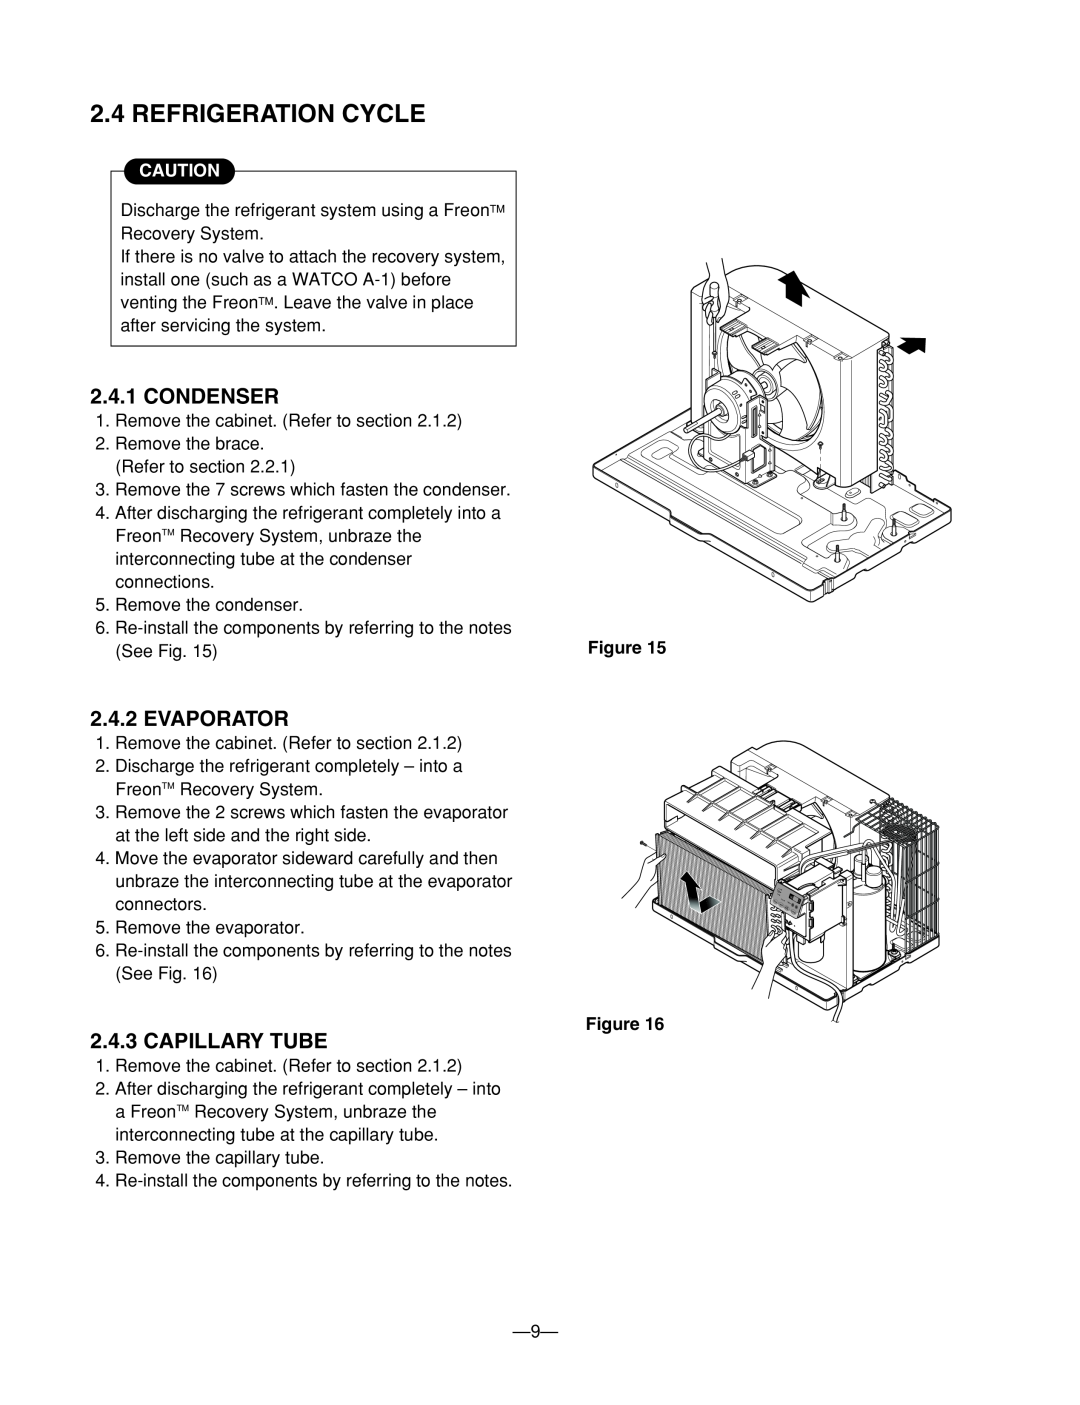 Heat Controller BG-103A service manual Refrigeration Cycle, Condenser, Evaporator, Capillary Tube 